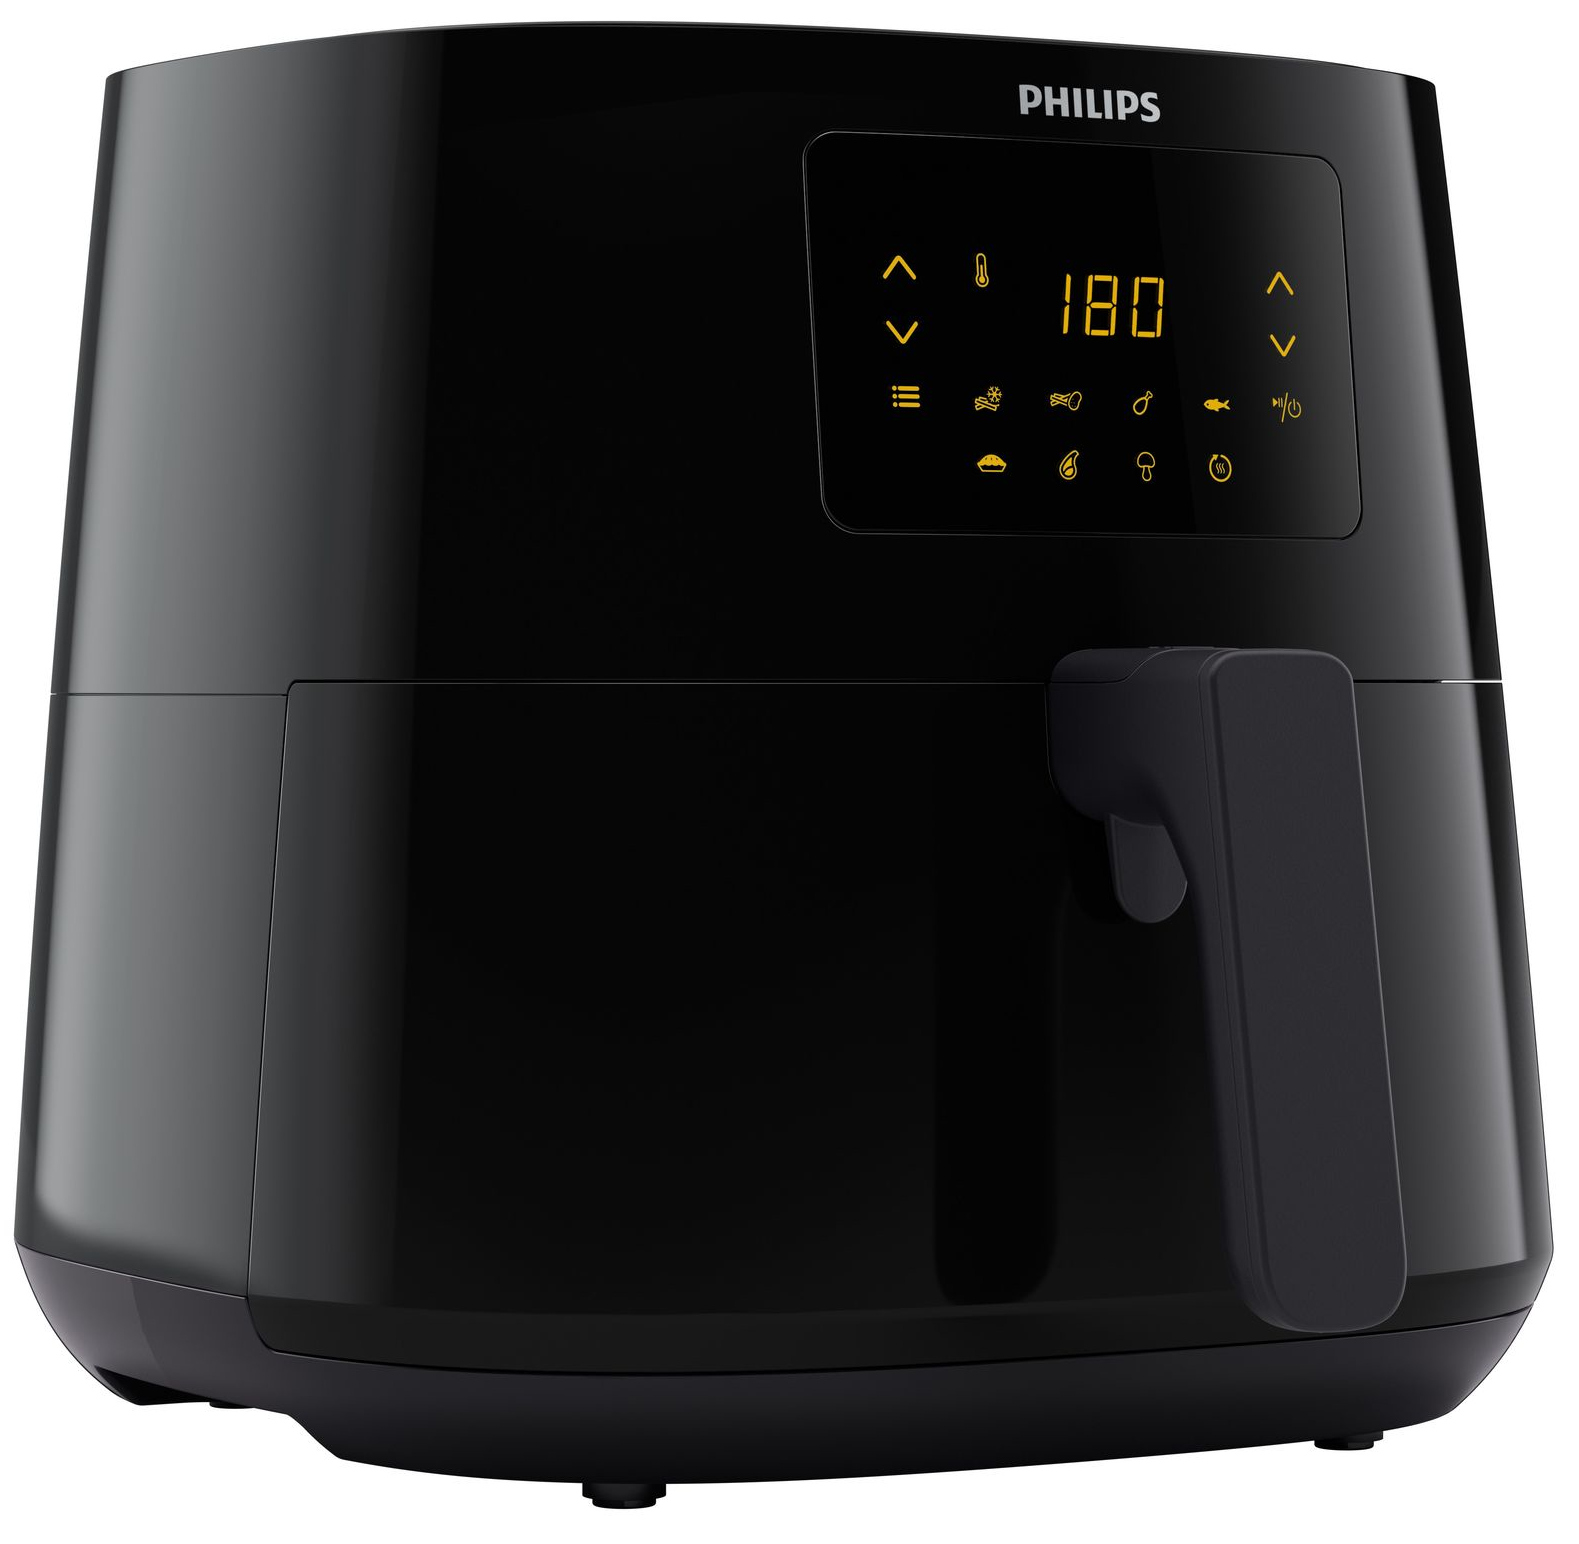 Мультипечь Philips HD9270/90 цена 7999.00 грн - фотография 2